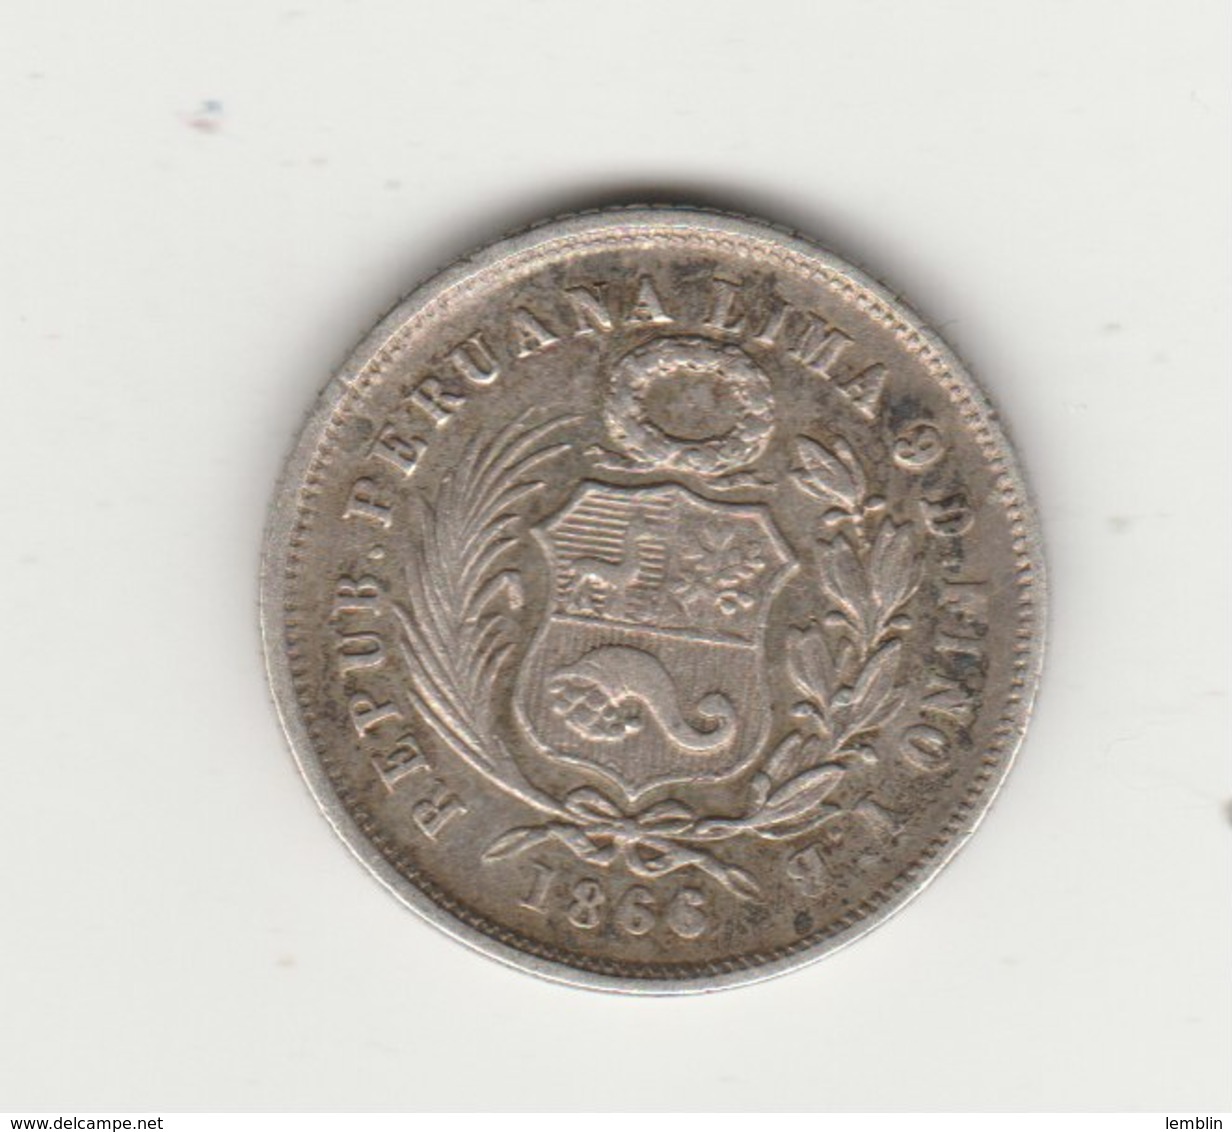 1 DINERO ARGENT 1866 - Peru